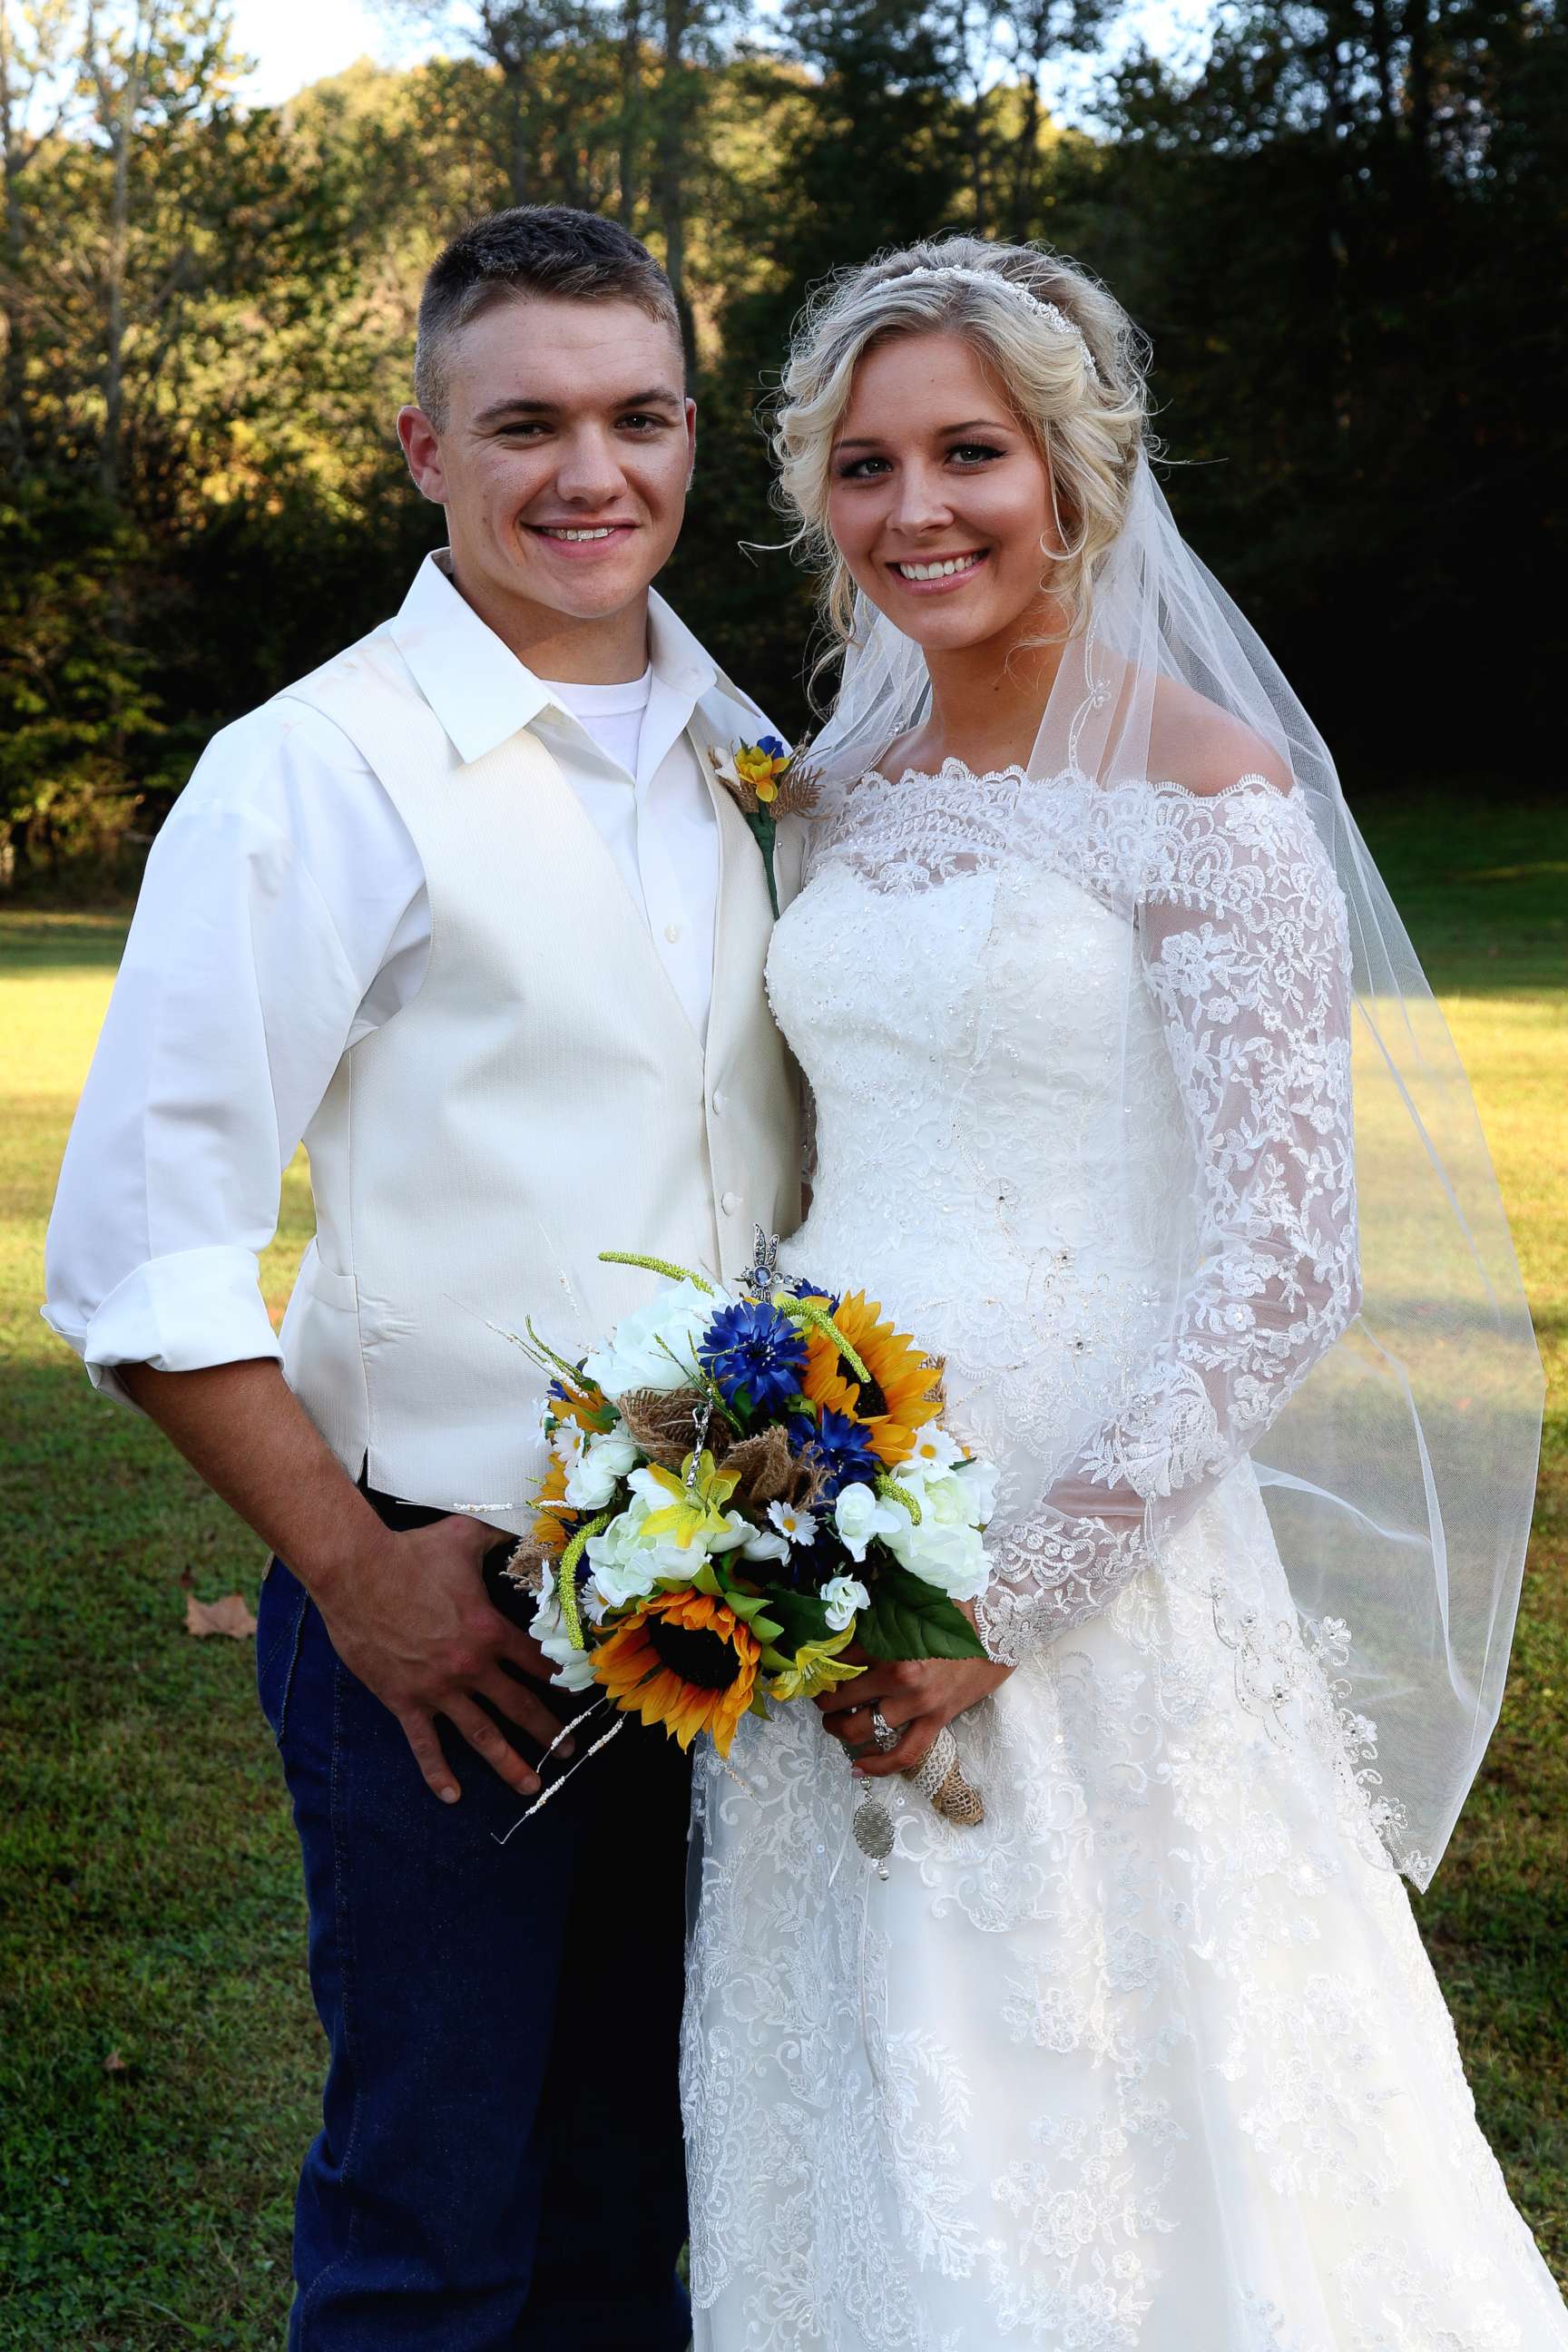 PHOTO: Newlyweds Mikayla and Dakota Wroten smile for the camera on their Oct. 14 wedding day.